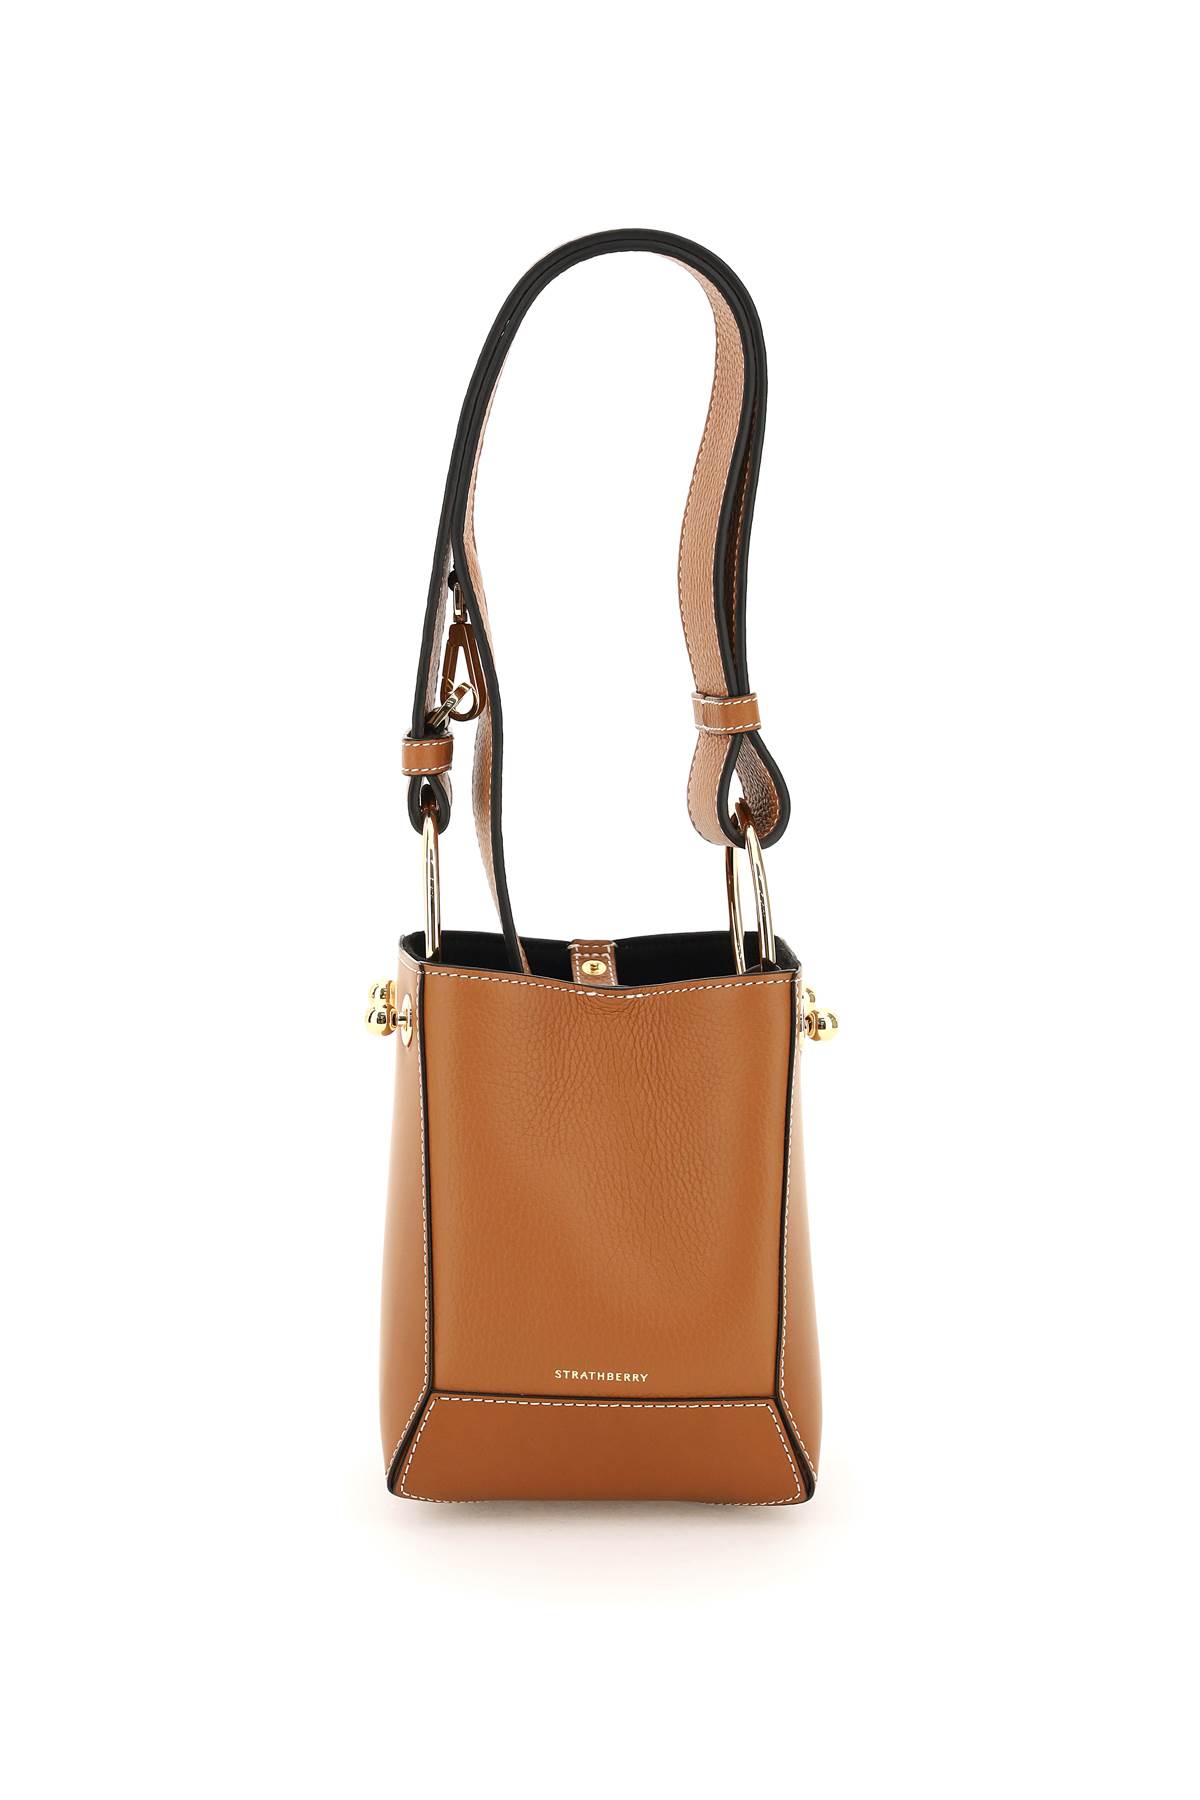 STRATHBERRY Bags for Women | ModeSens